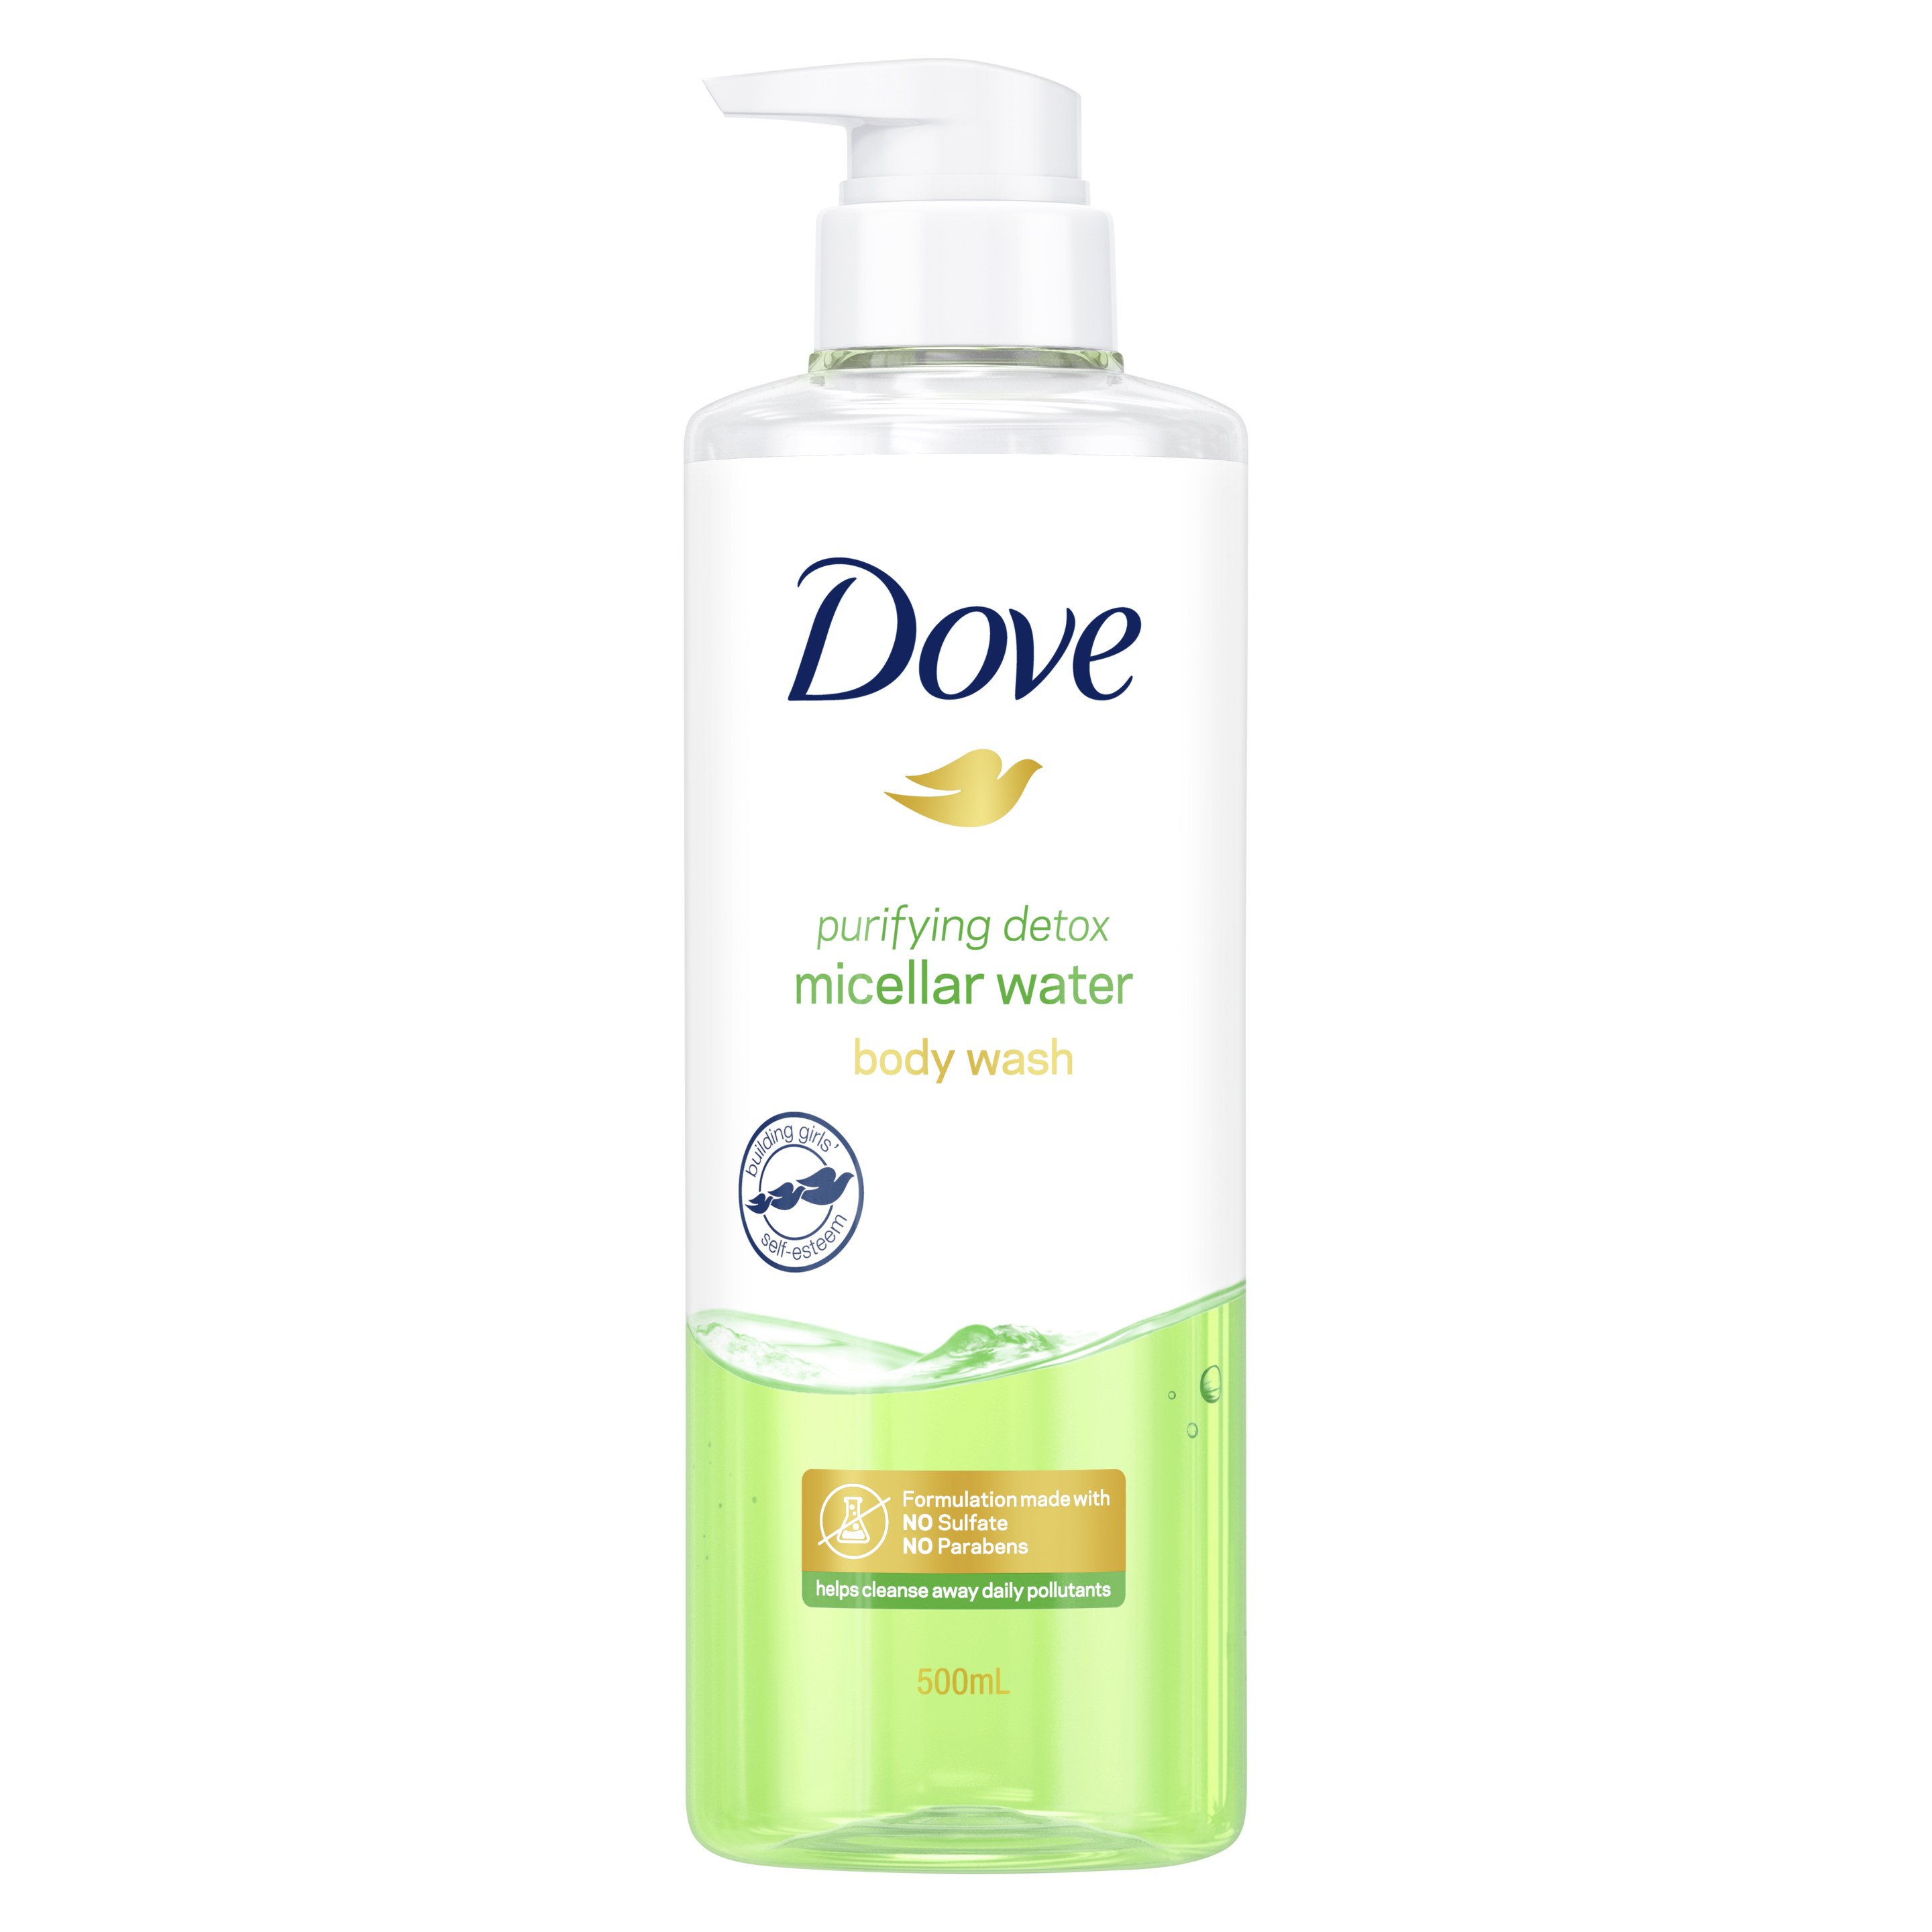 Dove Micellar Water Purifying Detox Body Wash 500ml Text